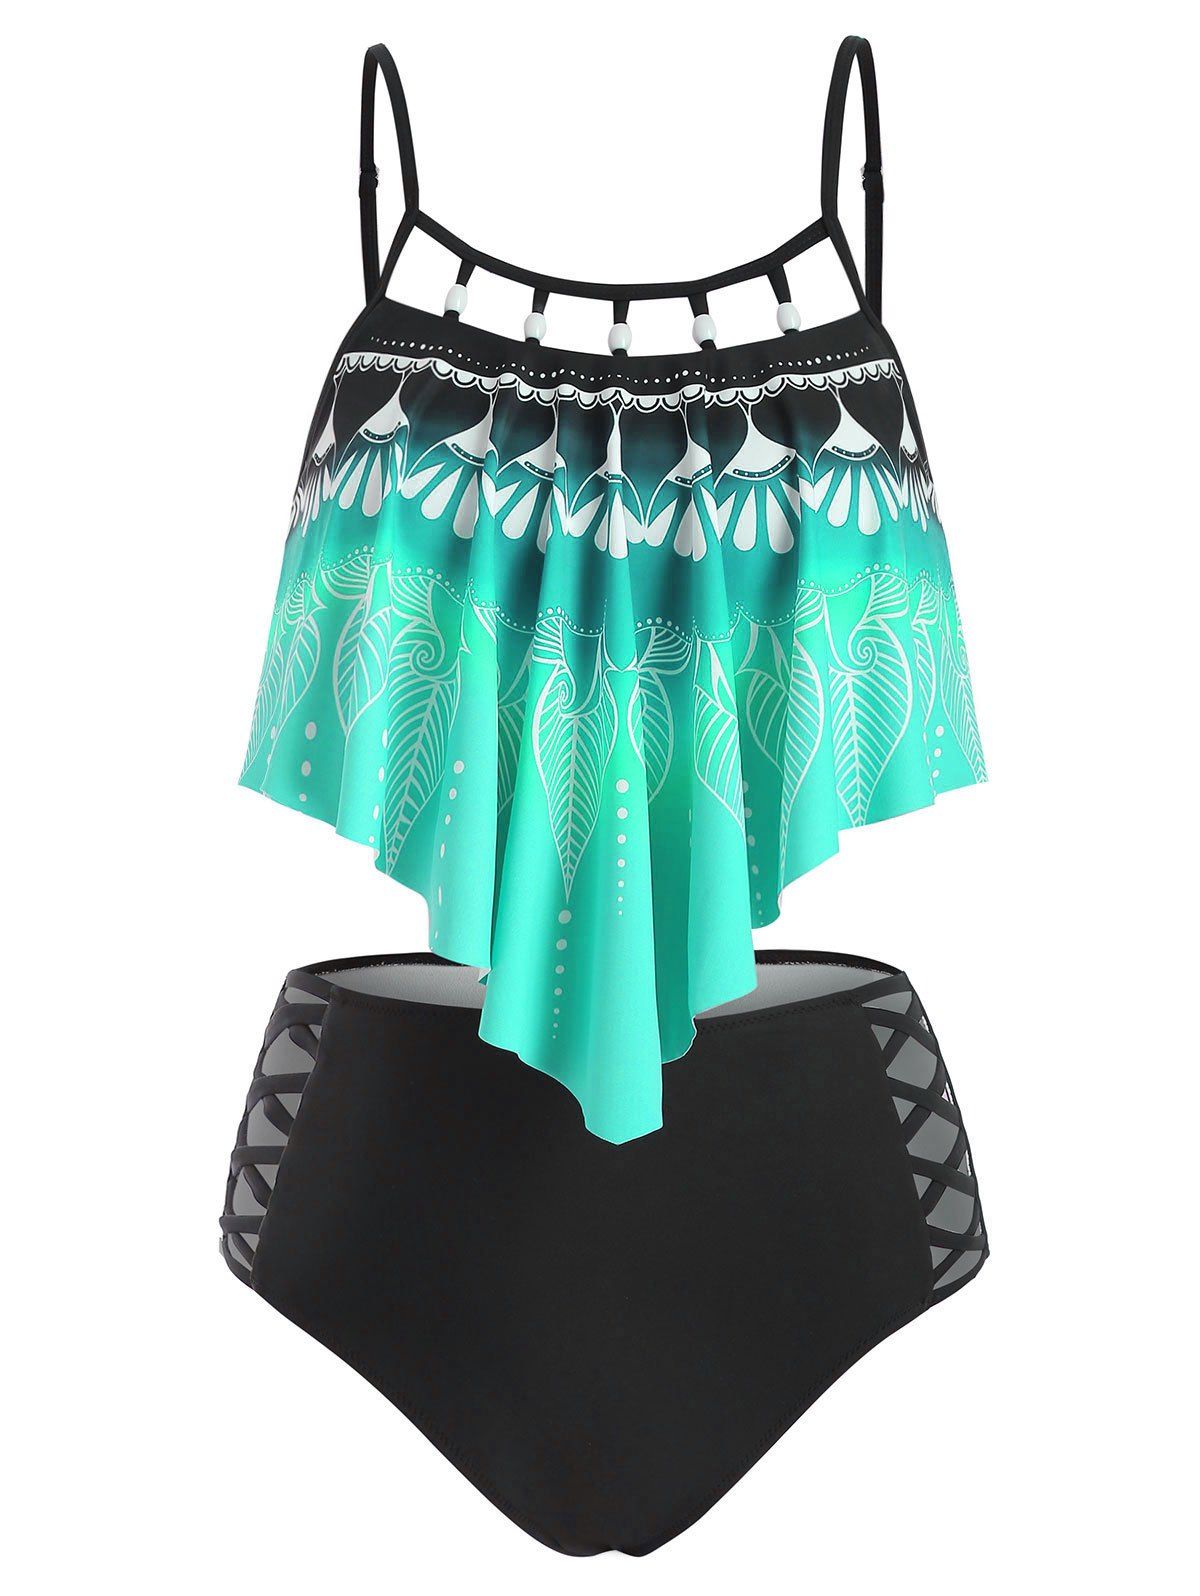 Leaf Print Beading Embellished Criss Criss Tankini Swimsuit - multicolor B XL